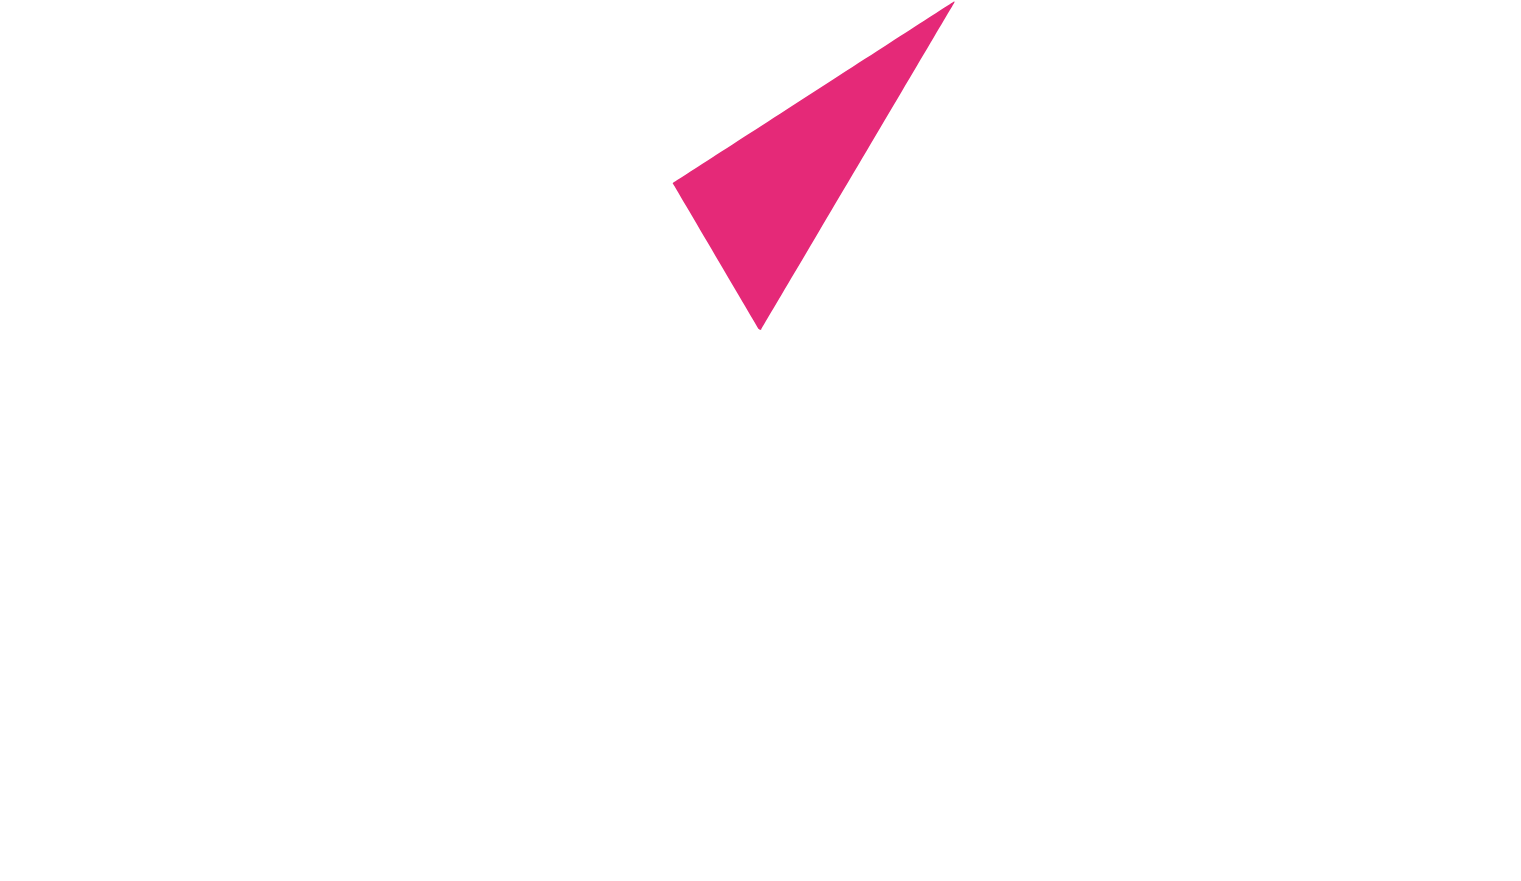 Vasta Platform logo grand pour les fonds sombres (PNG transparent)